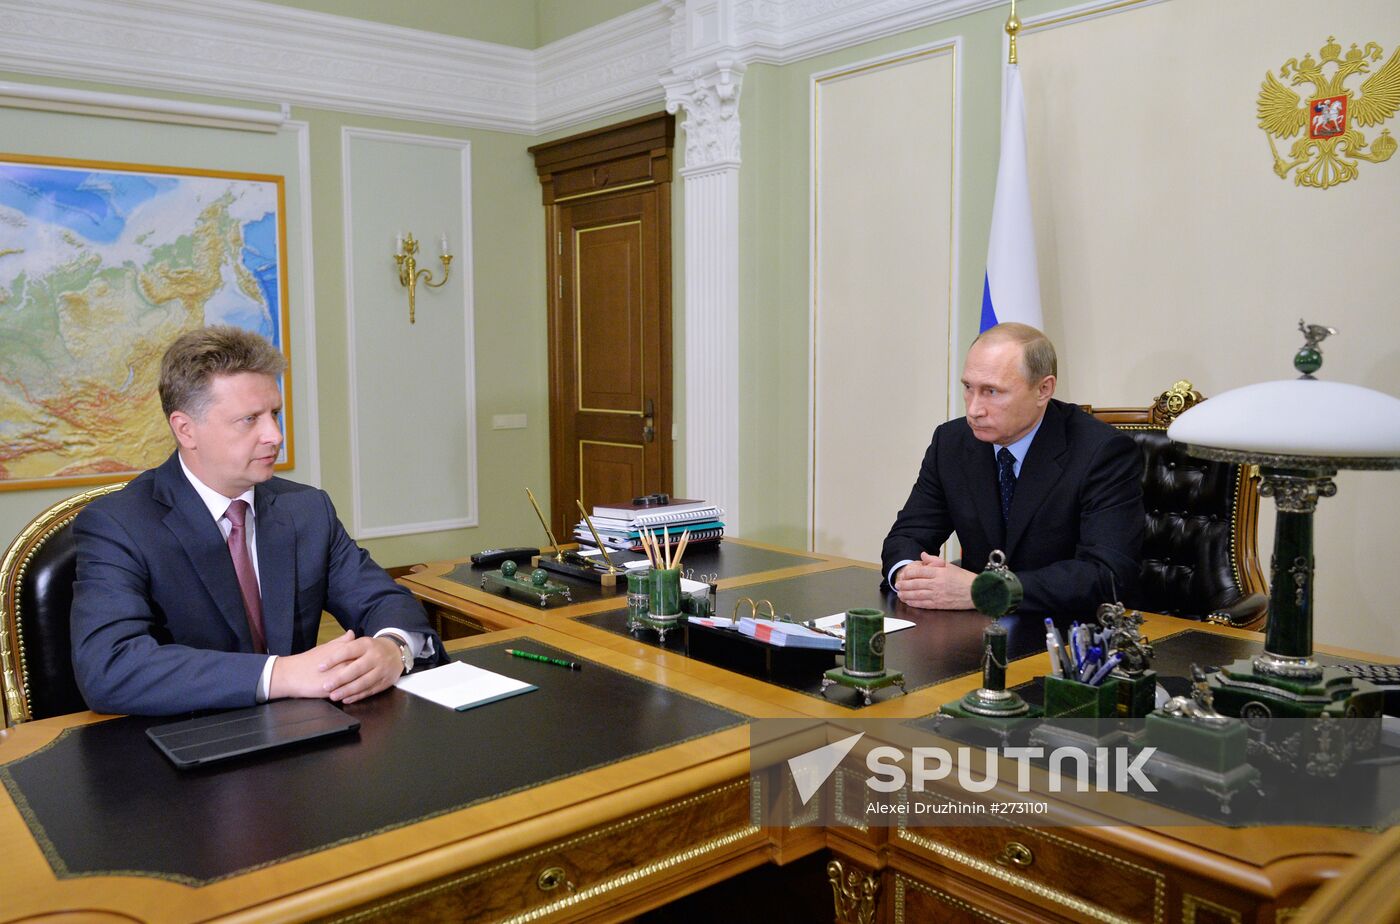 President Vladimir Putin meets with Transport Minister Maxim Sokolov